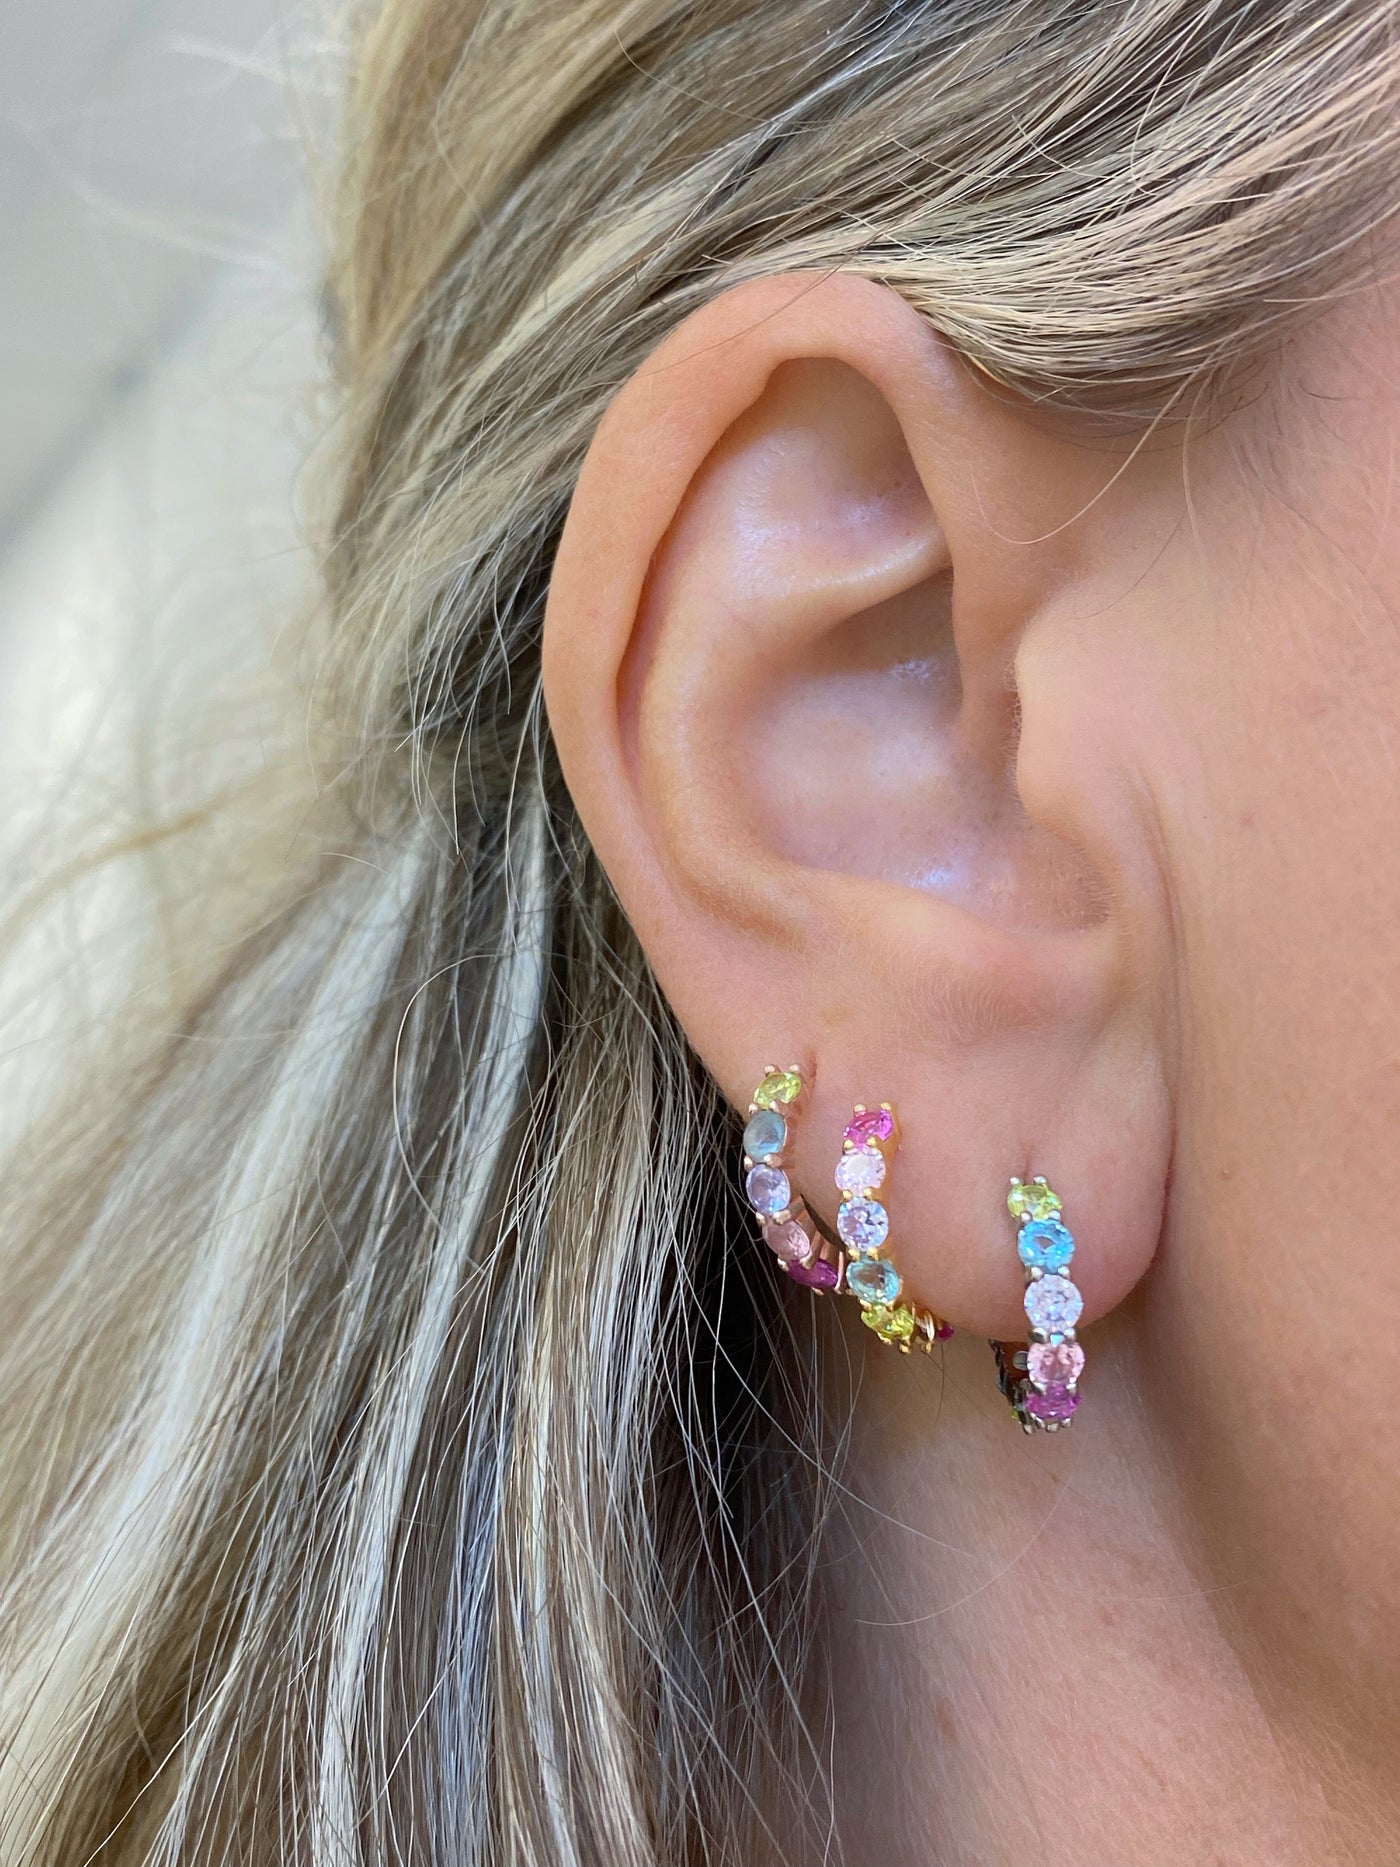 Silver hoop earrings with multicolor stones - 20 mm